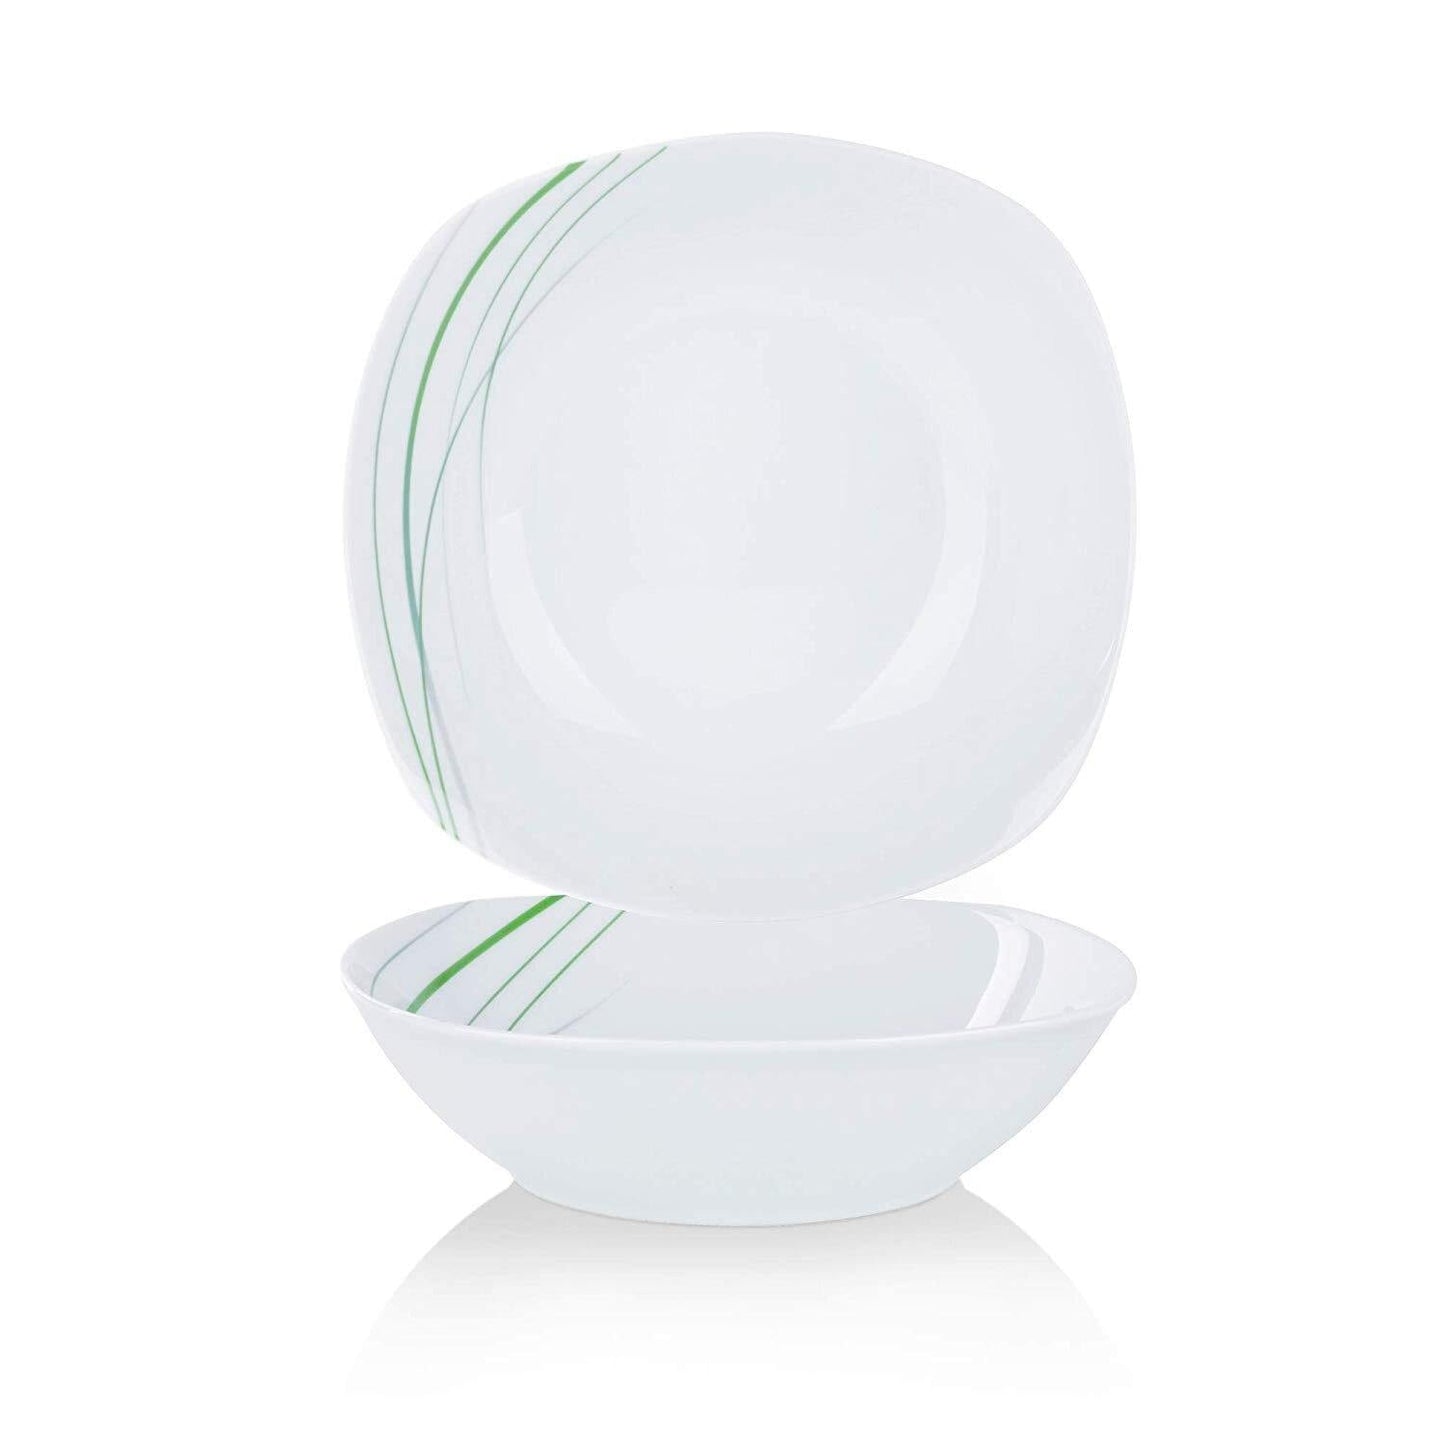 2-Piece 9" AVIVA White Porcelain Round Fruit&Salad Bowl Set (1050 ML) - Nordic Side - 1050, AVIVA, Bowl, Deep, DishesSoupDessert, for, FruitSalad, ML, Piece, Plate, Porcelain, Round, SaladSid